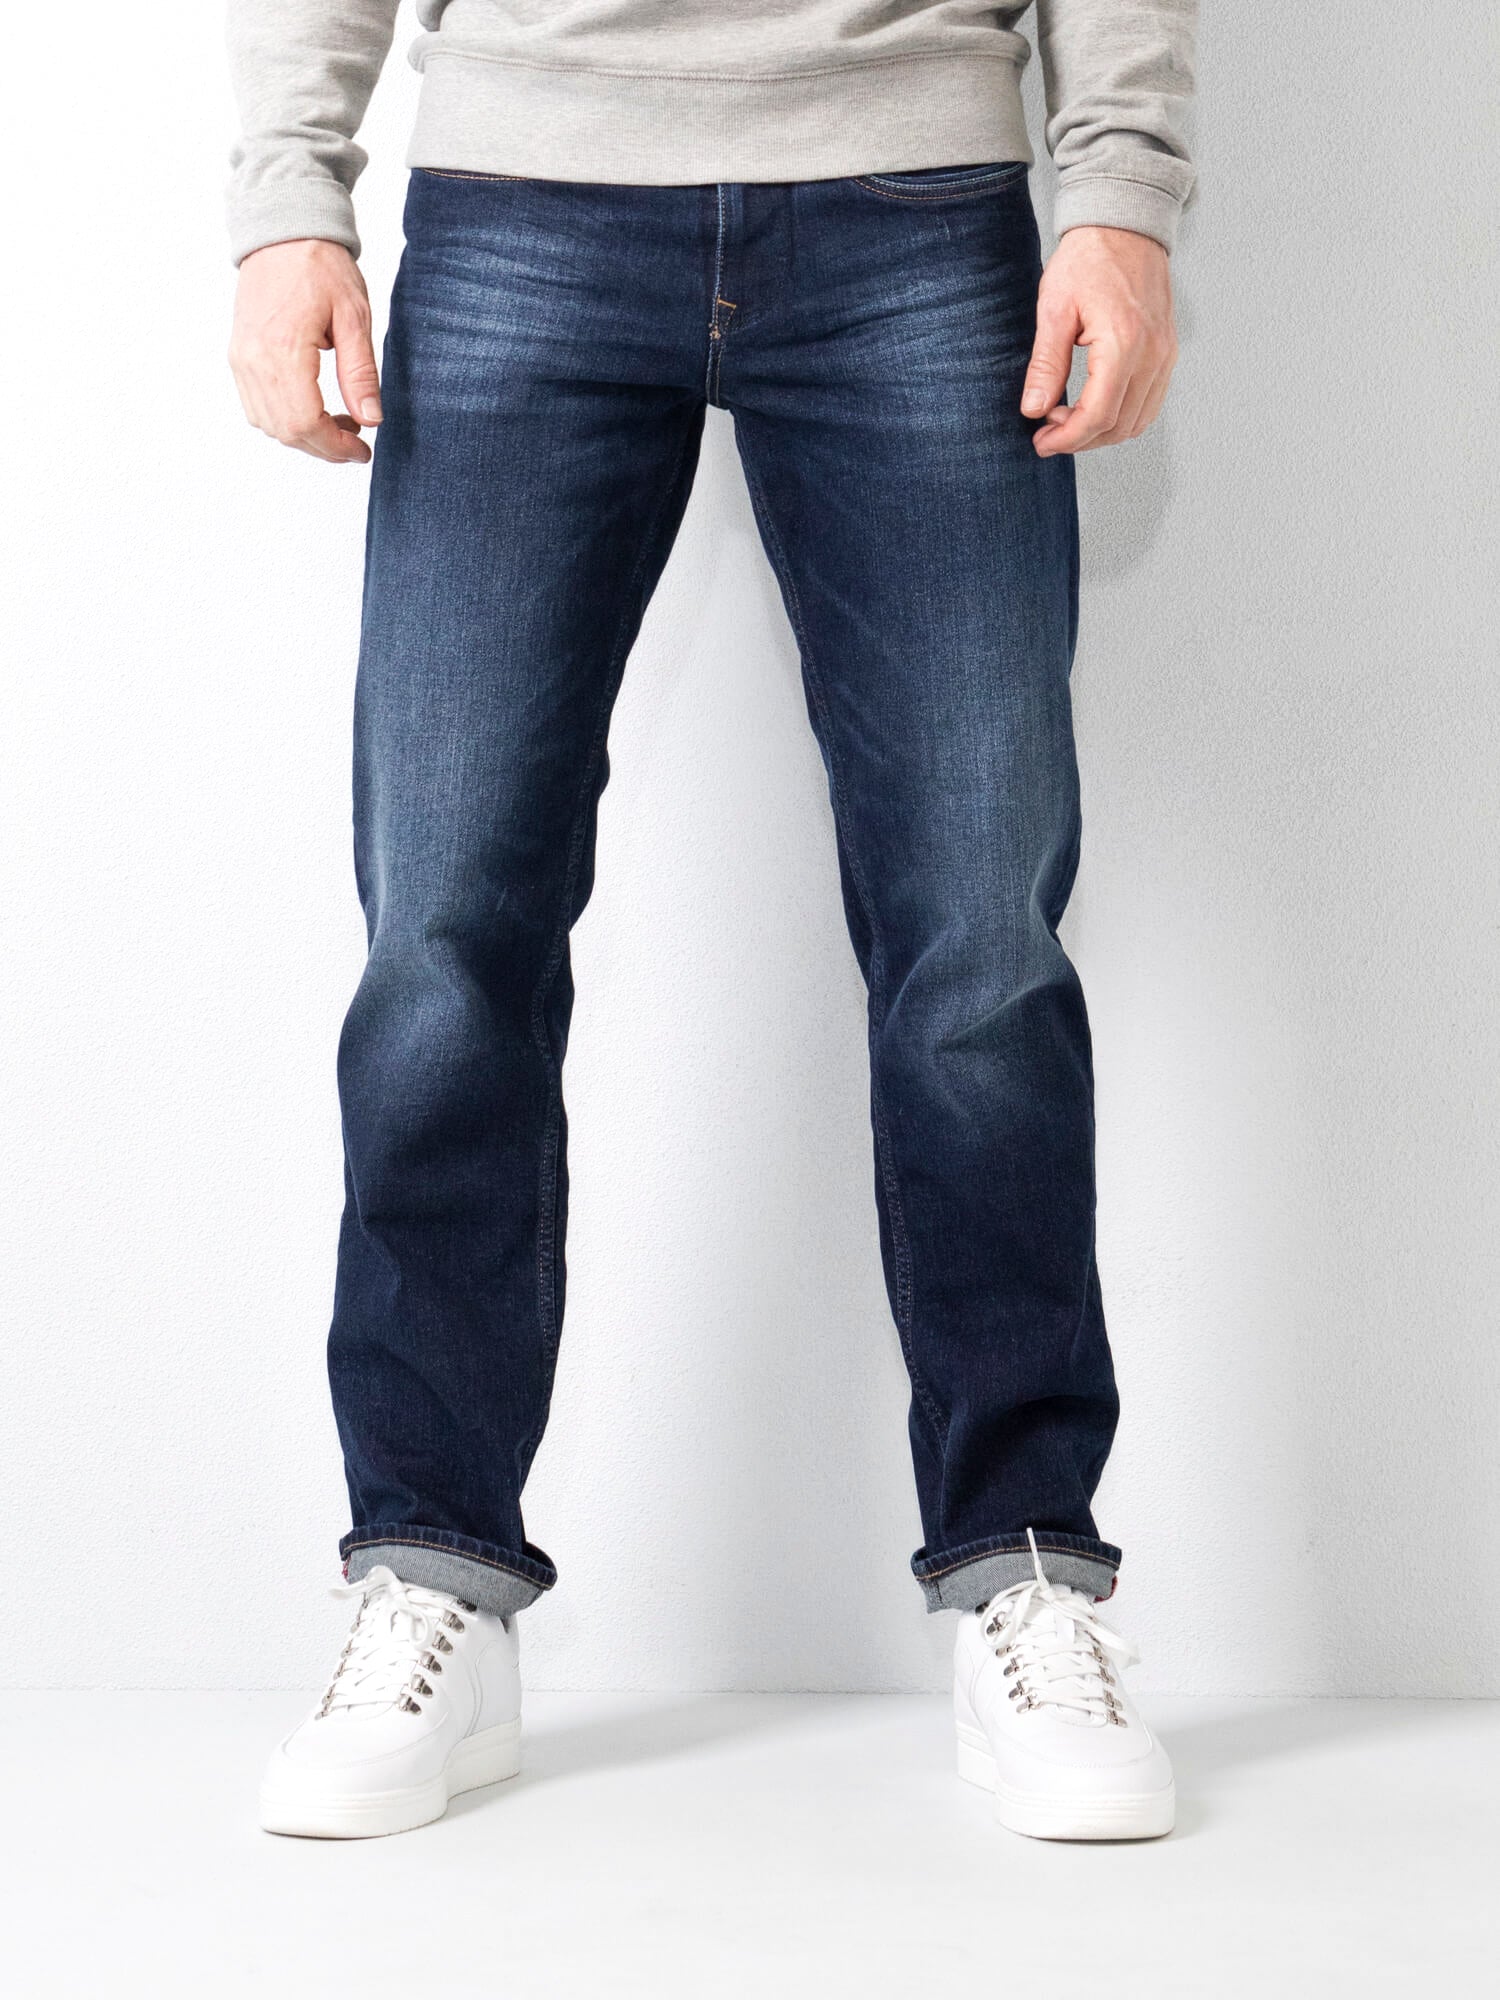 Regular Fit Jeans Collection - Men Petrol Industries® Online Store